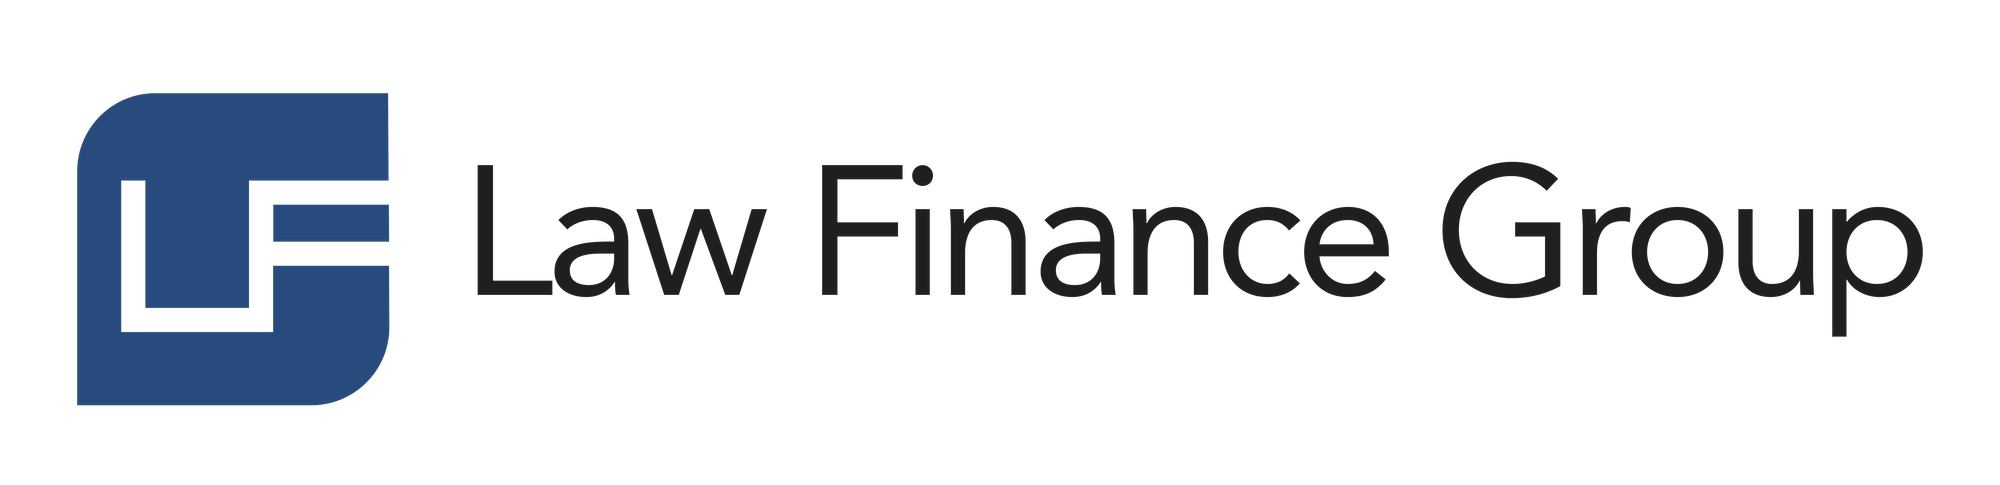 Sponsor logo - Law Finance Group